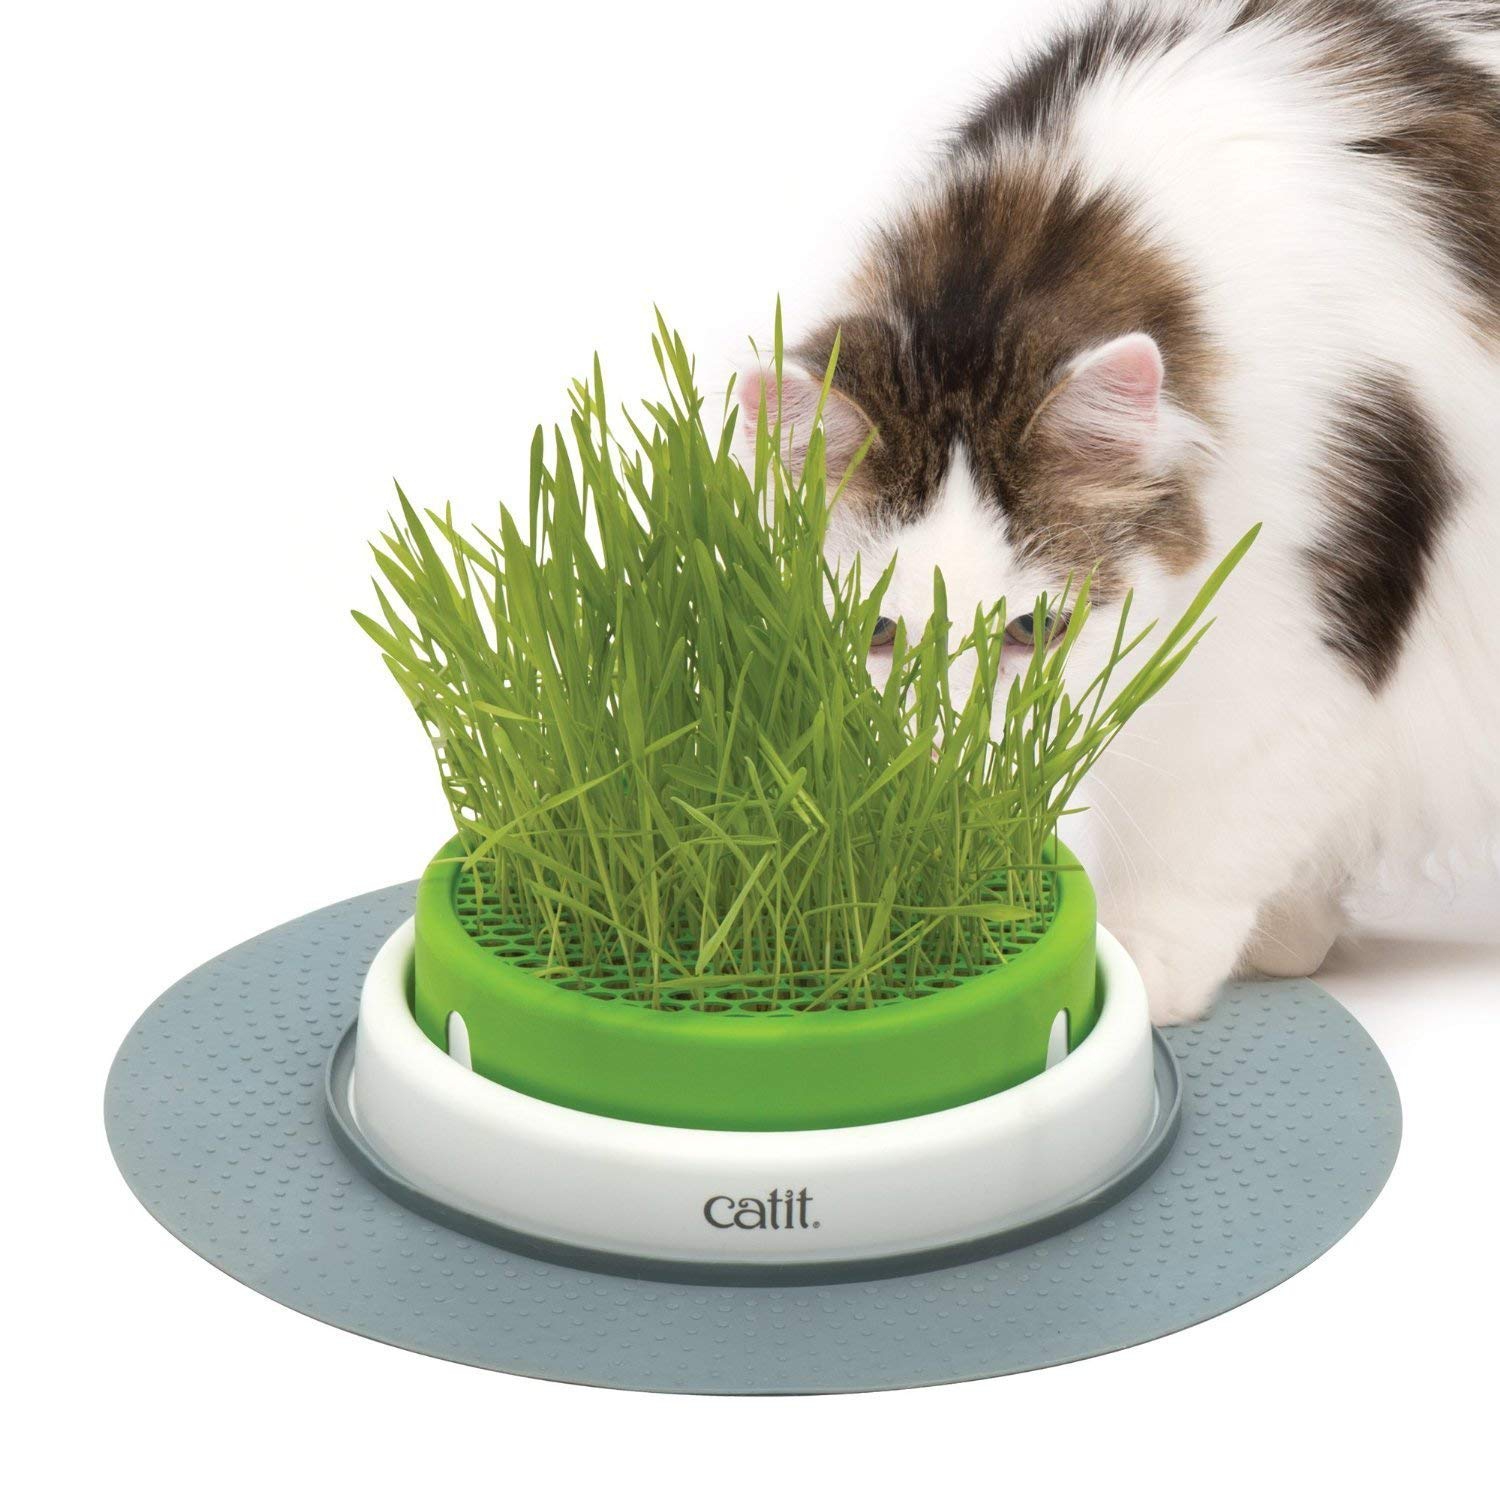 Catit Senses 2.0 Grass Planter, Green (43161W)